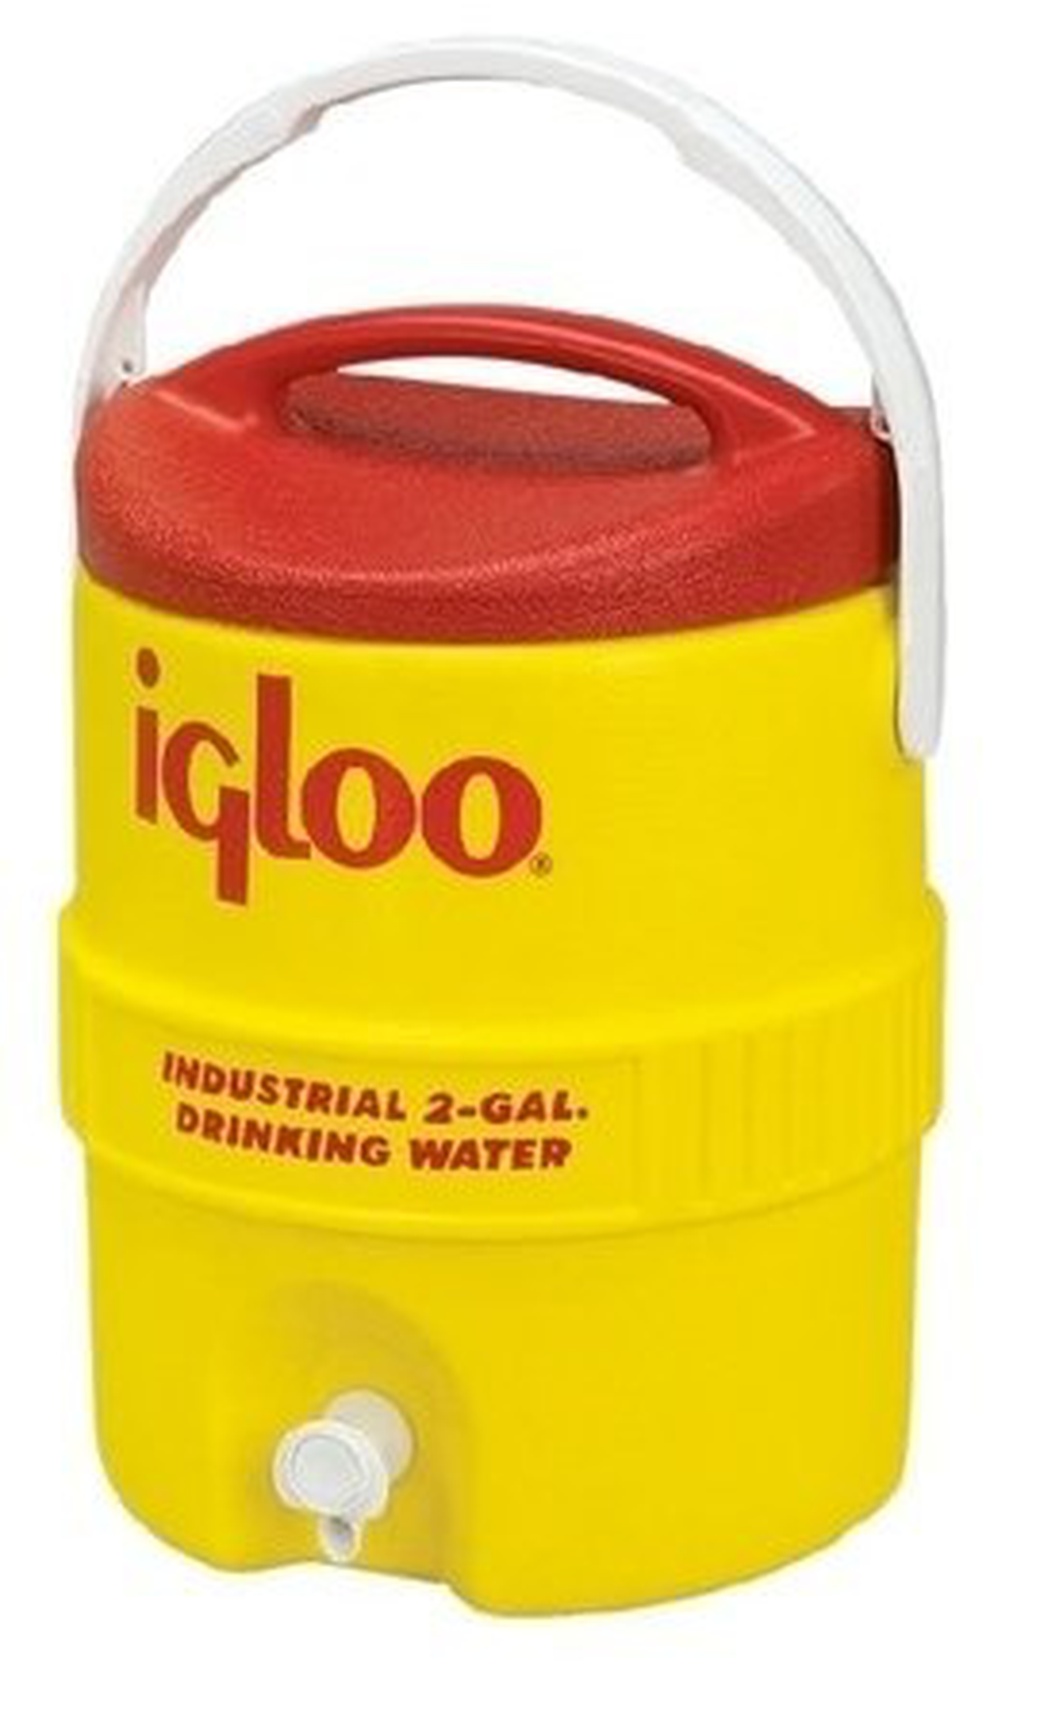 Изотермический контейнер (термобокс) Igloo 10 Gallon 400 Series Beverage Cooler, 38L фото